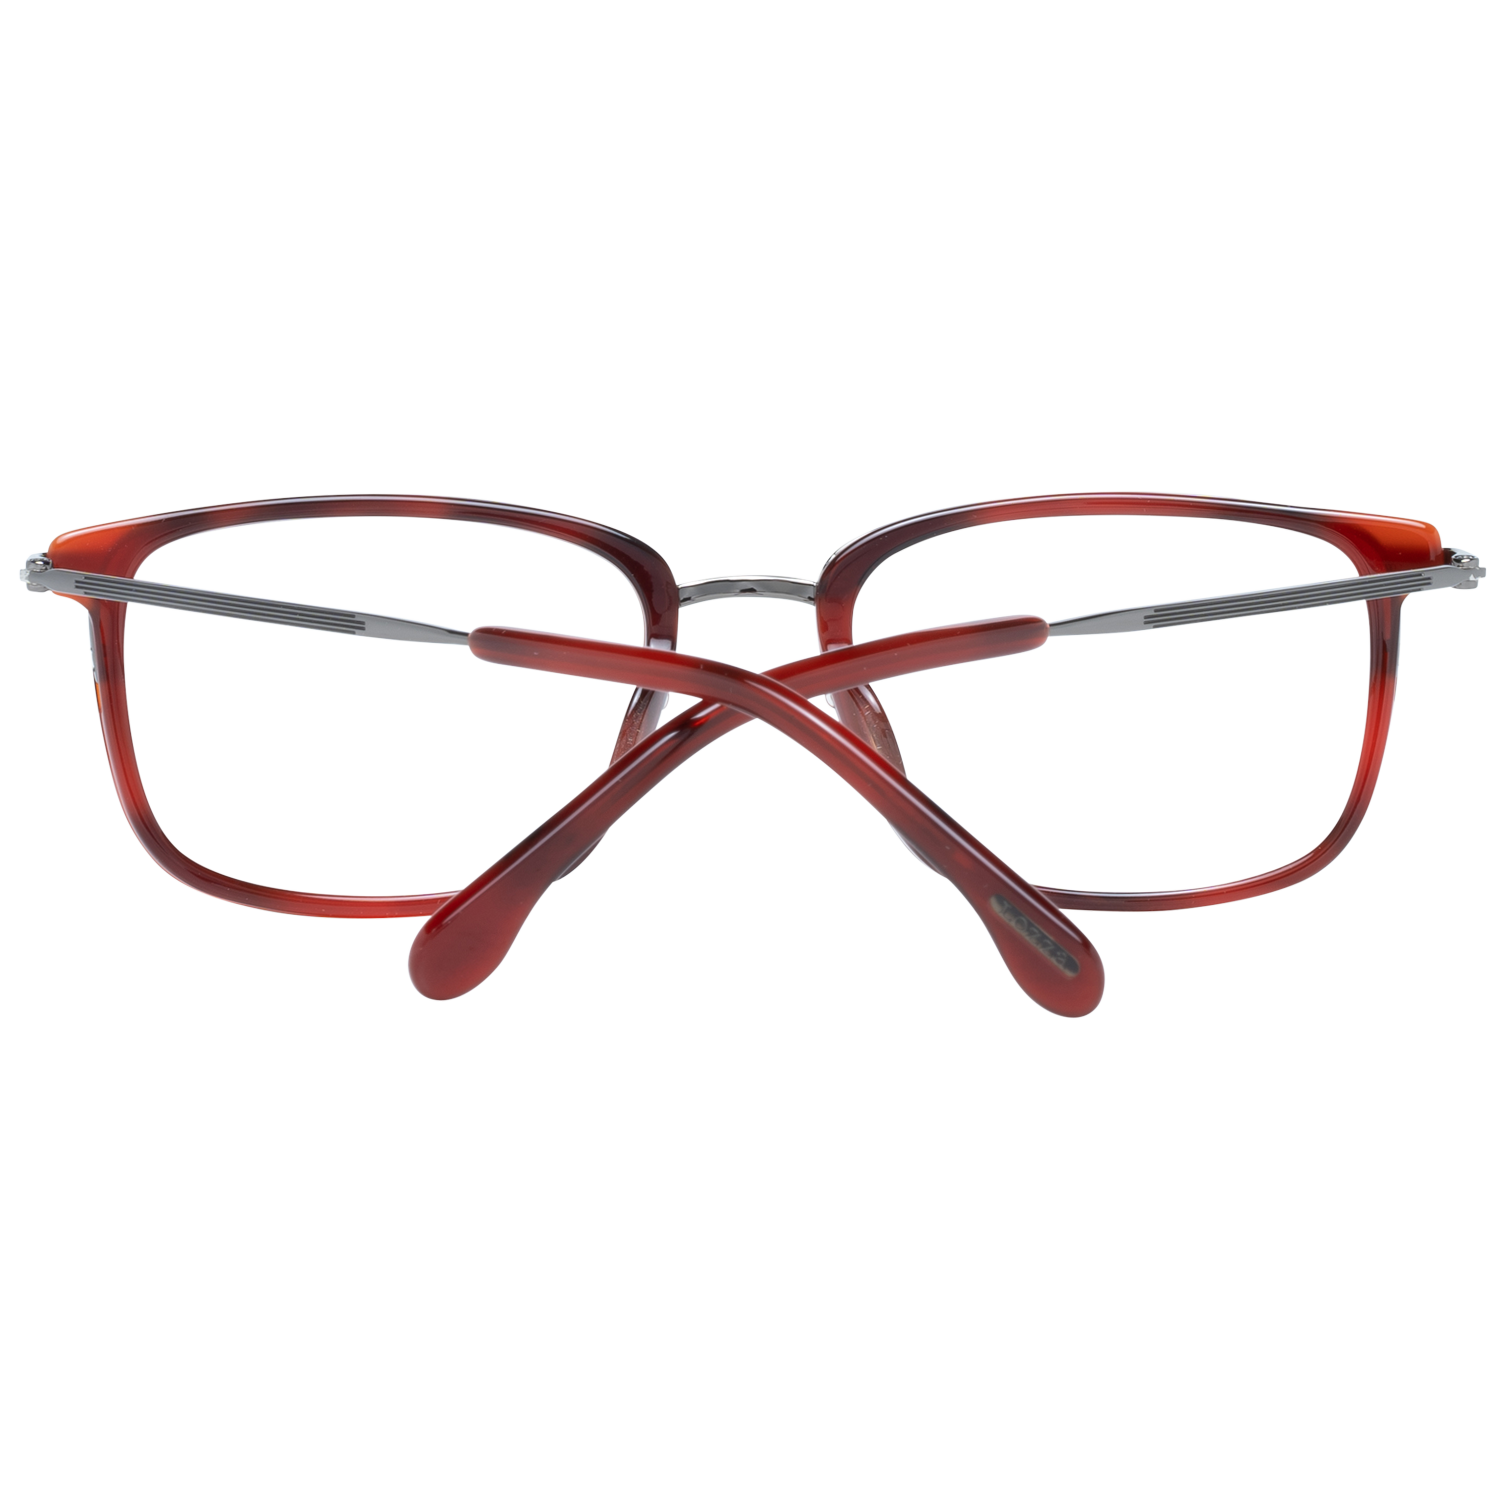 Lozza Frames Lozza Optical Frame VL2307 568K 54 Eyeglasses Eyewear UK USA Australia 